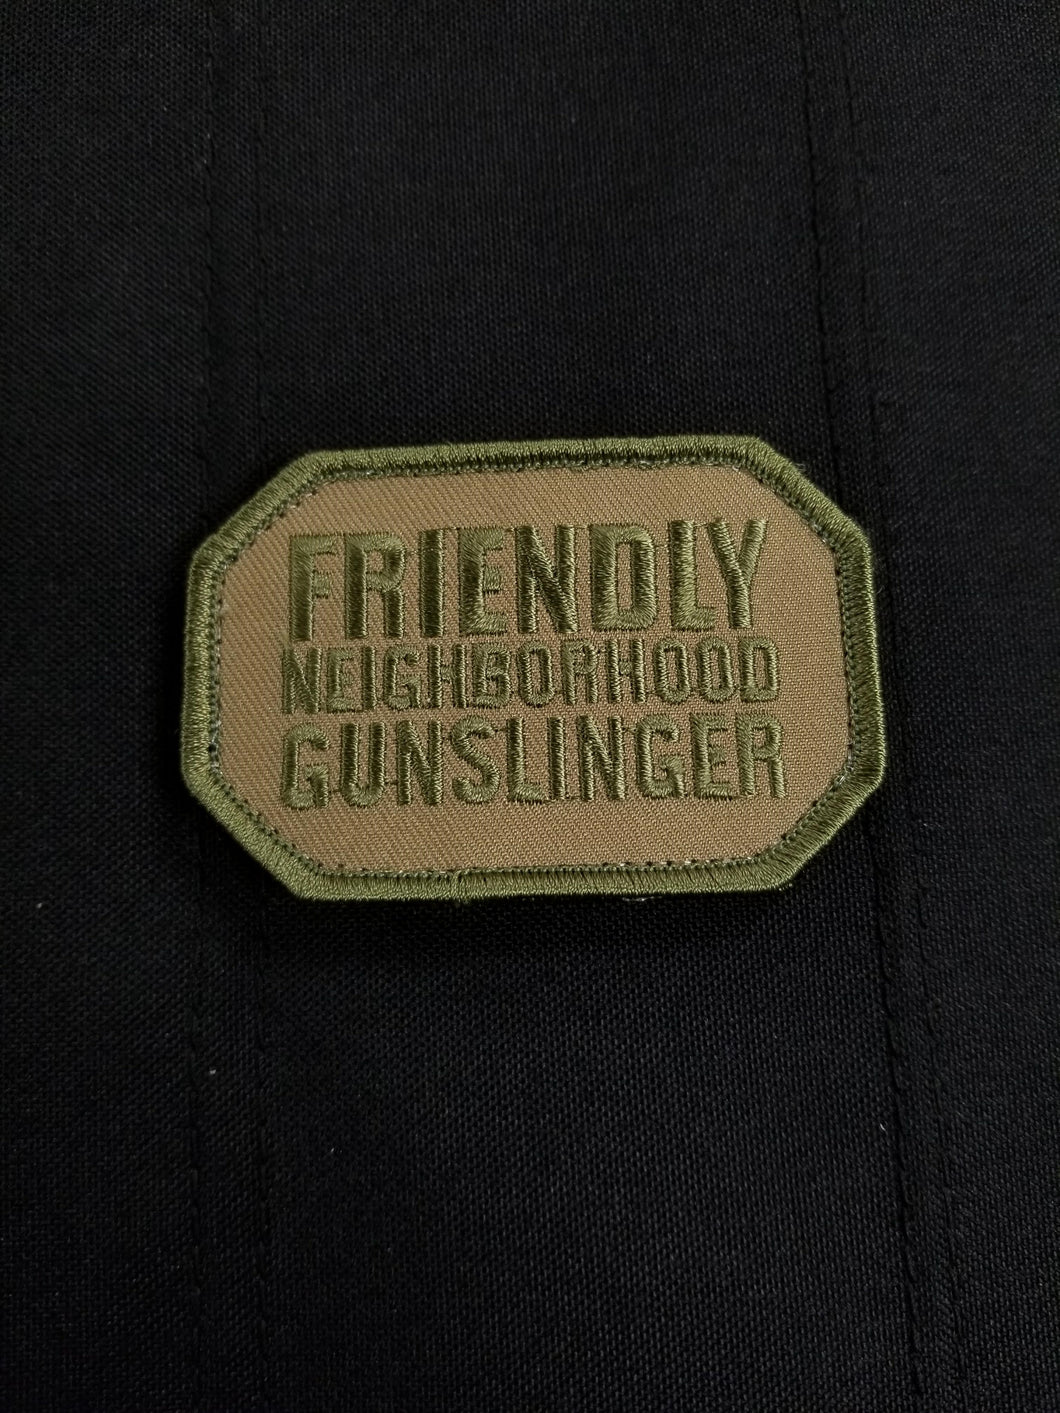 Friendly Neighborhood Gunslinger